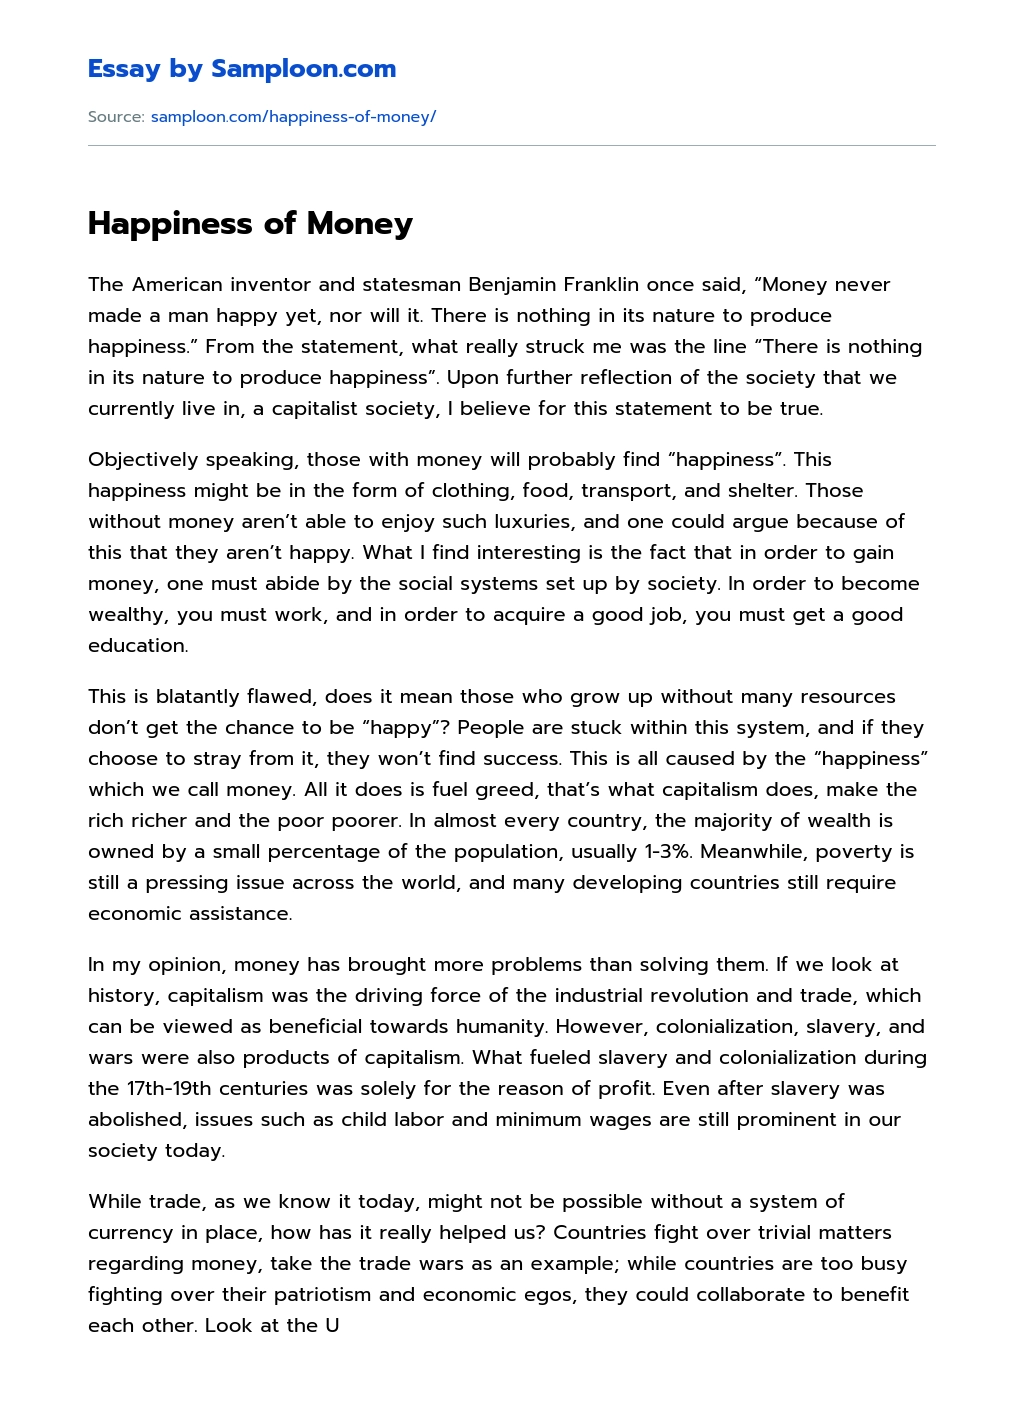 Happiness of Money essay